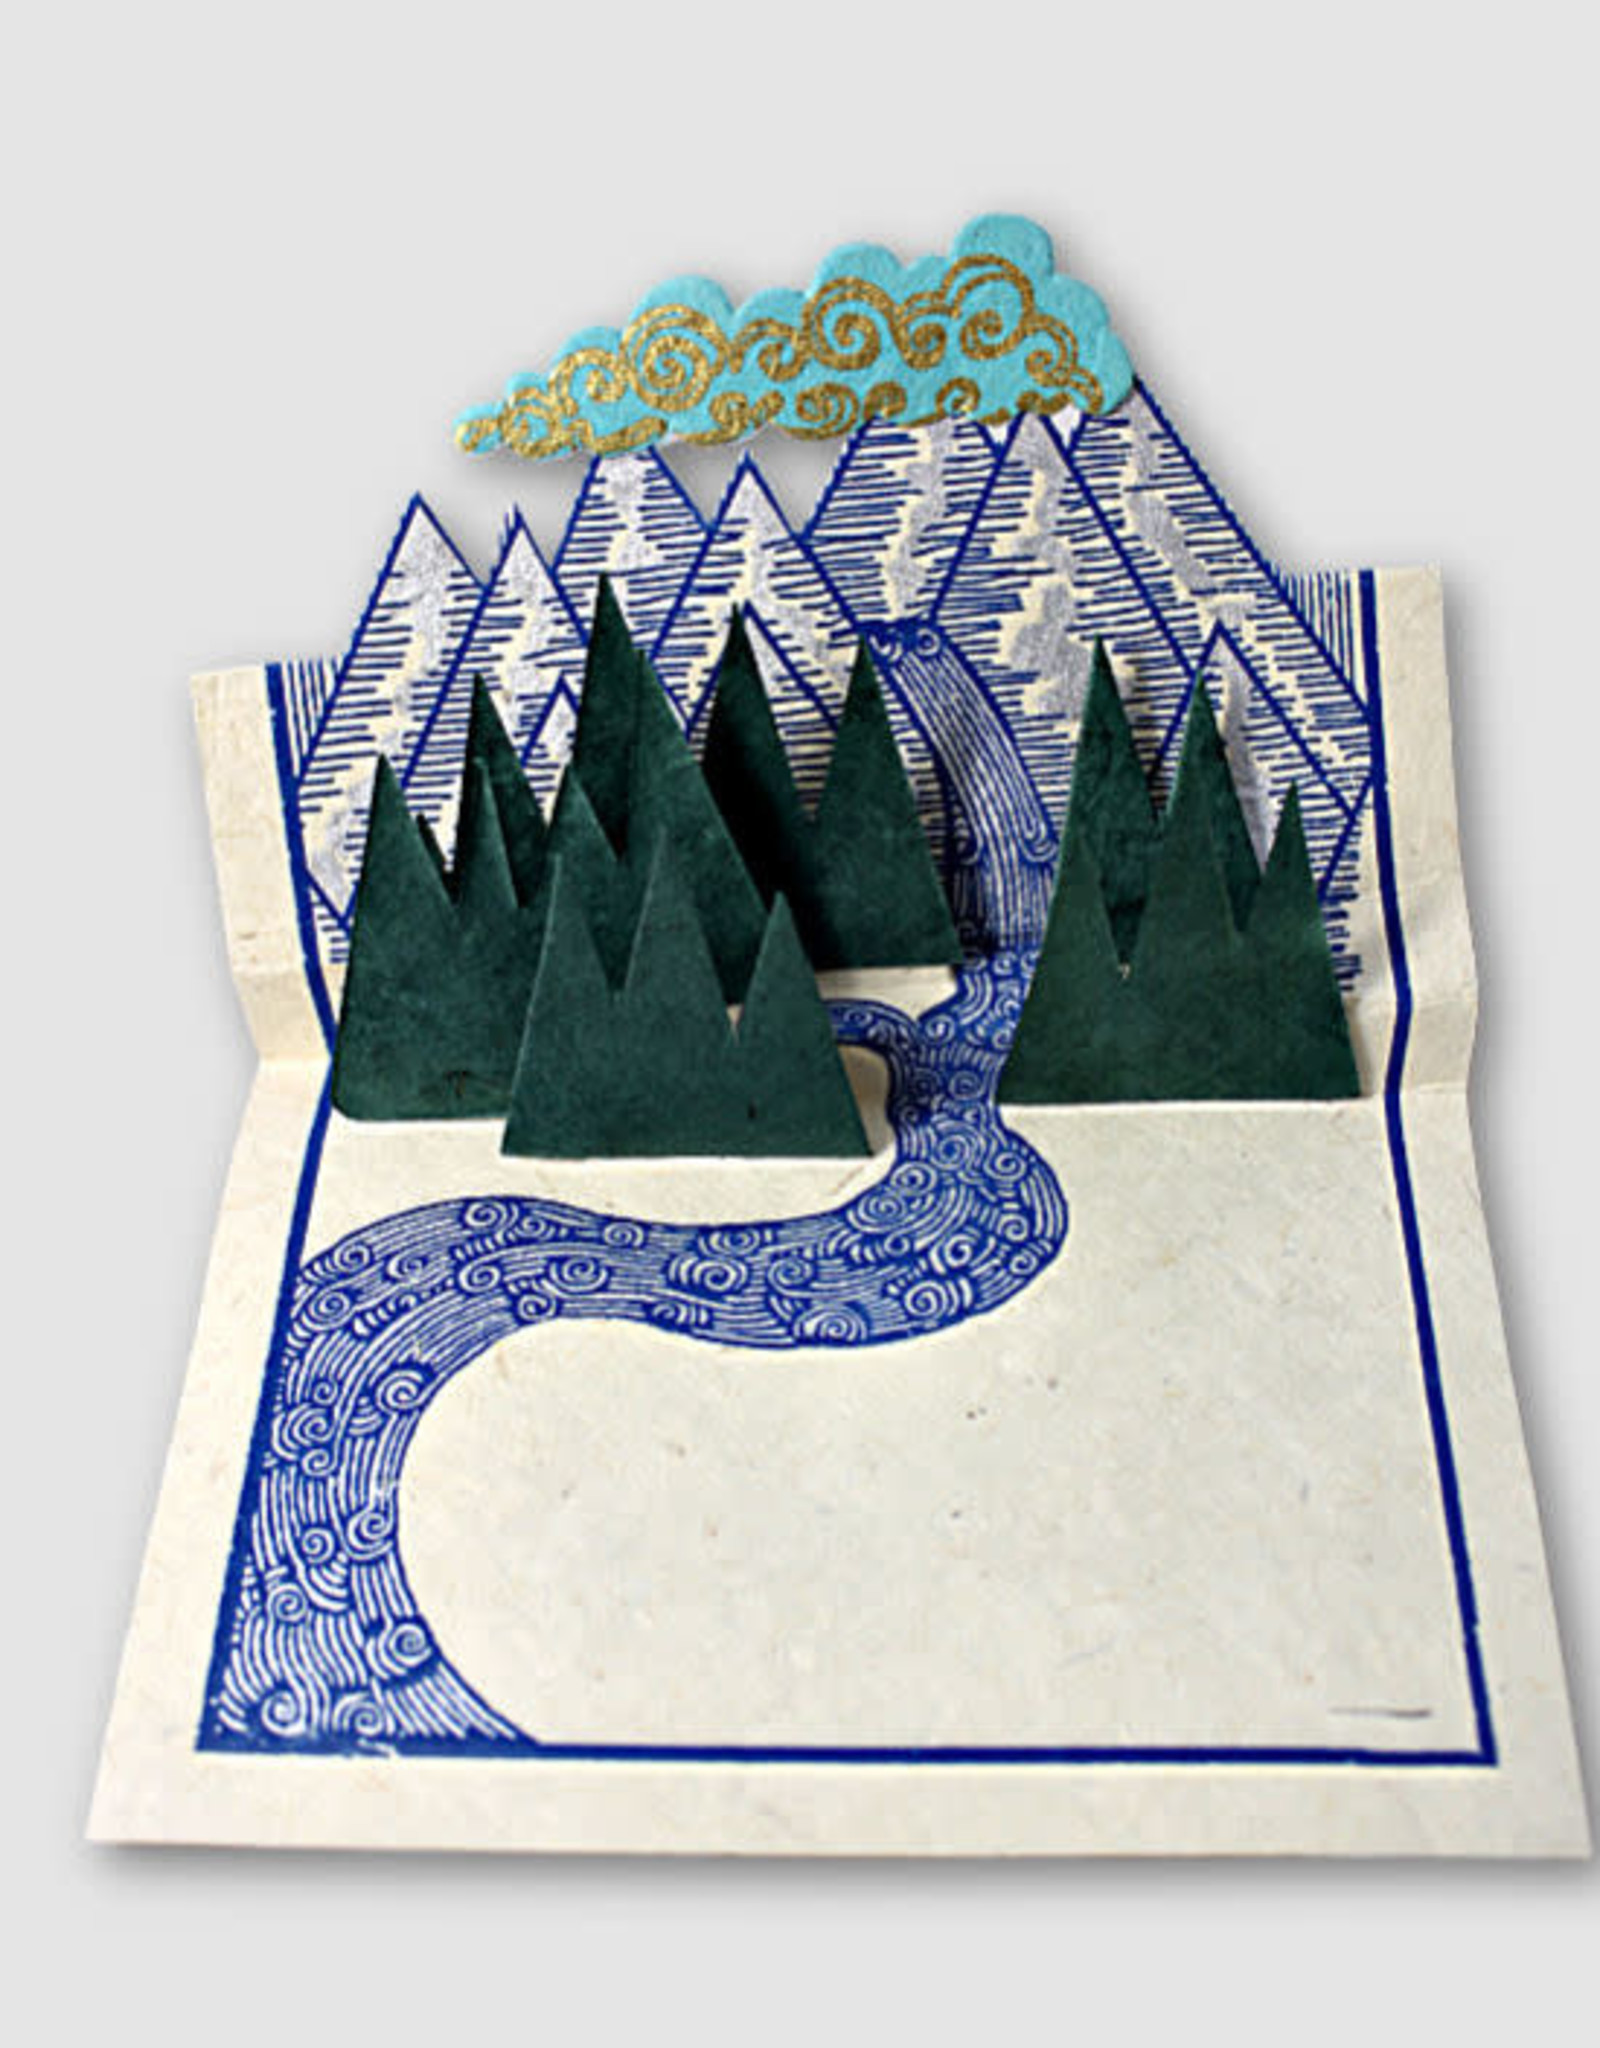 Ganesh Himal Pop up Mountain Card